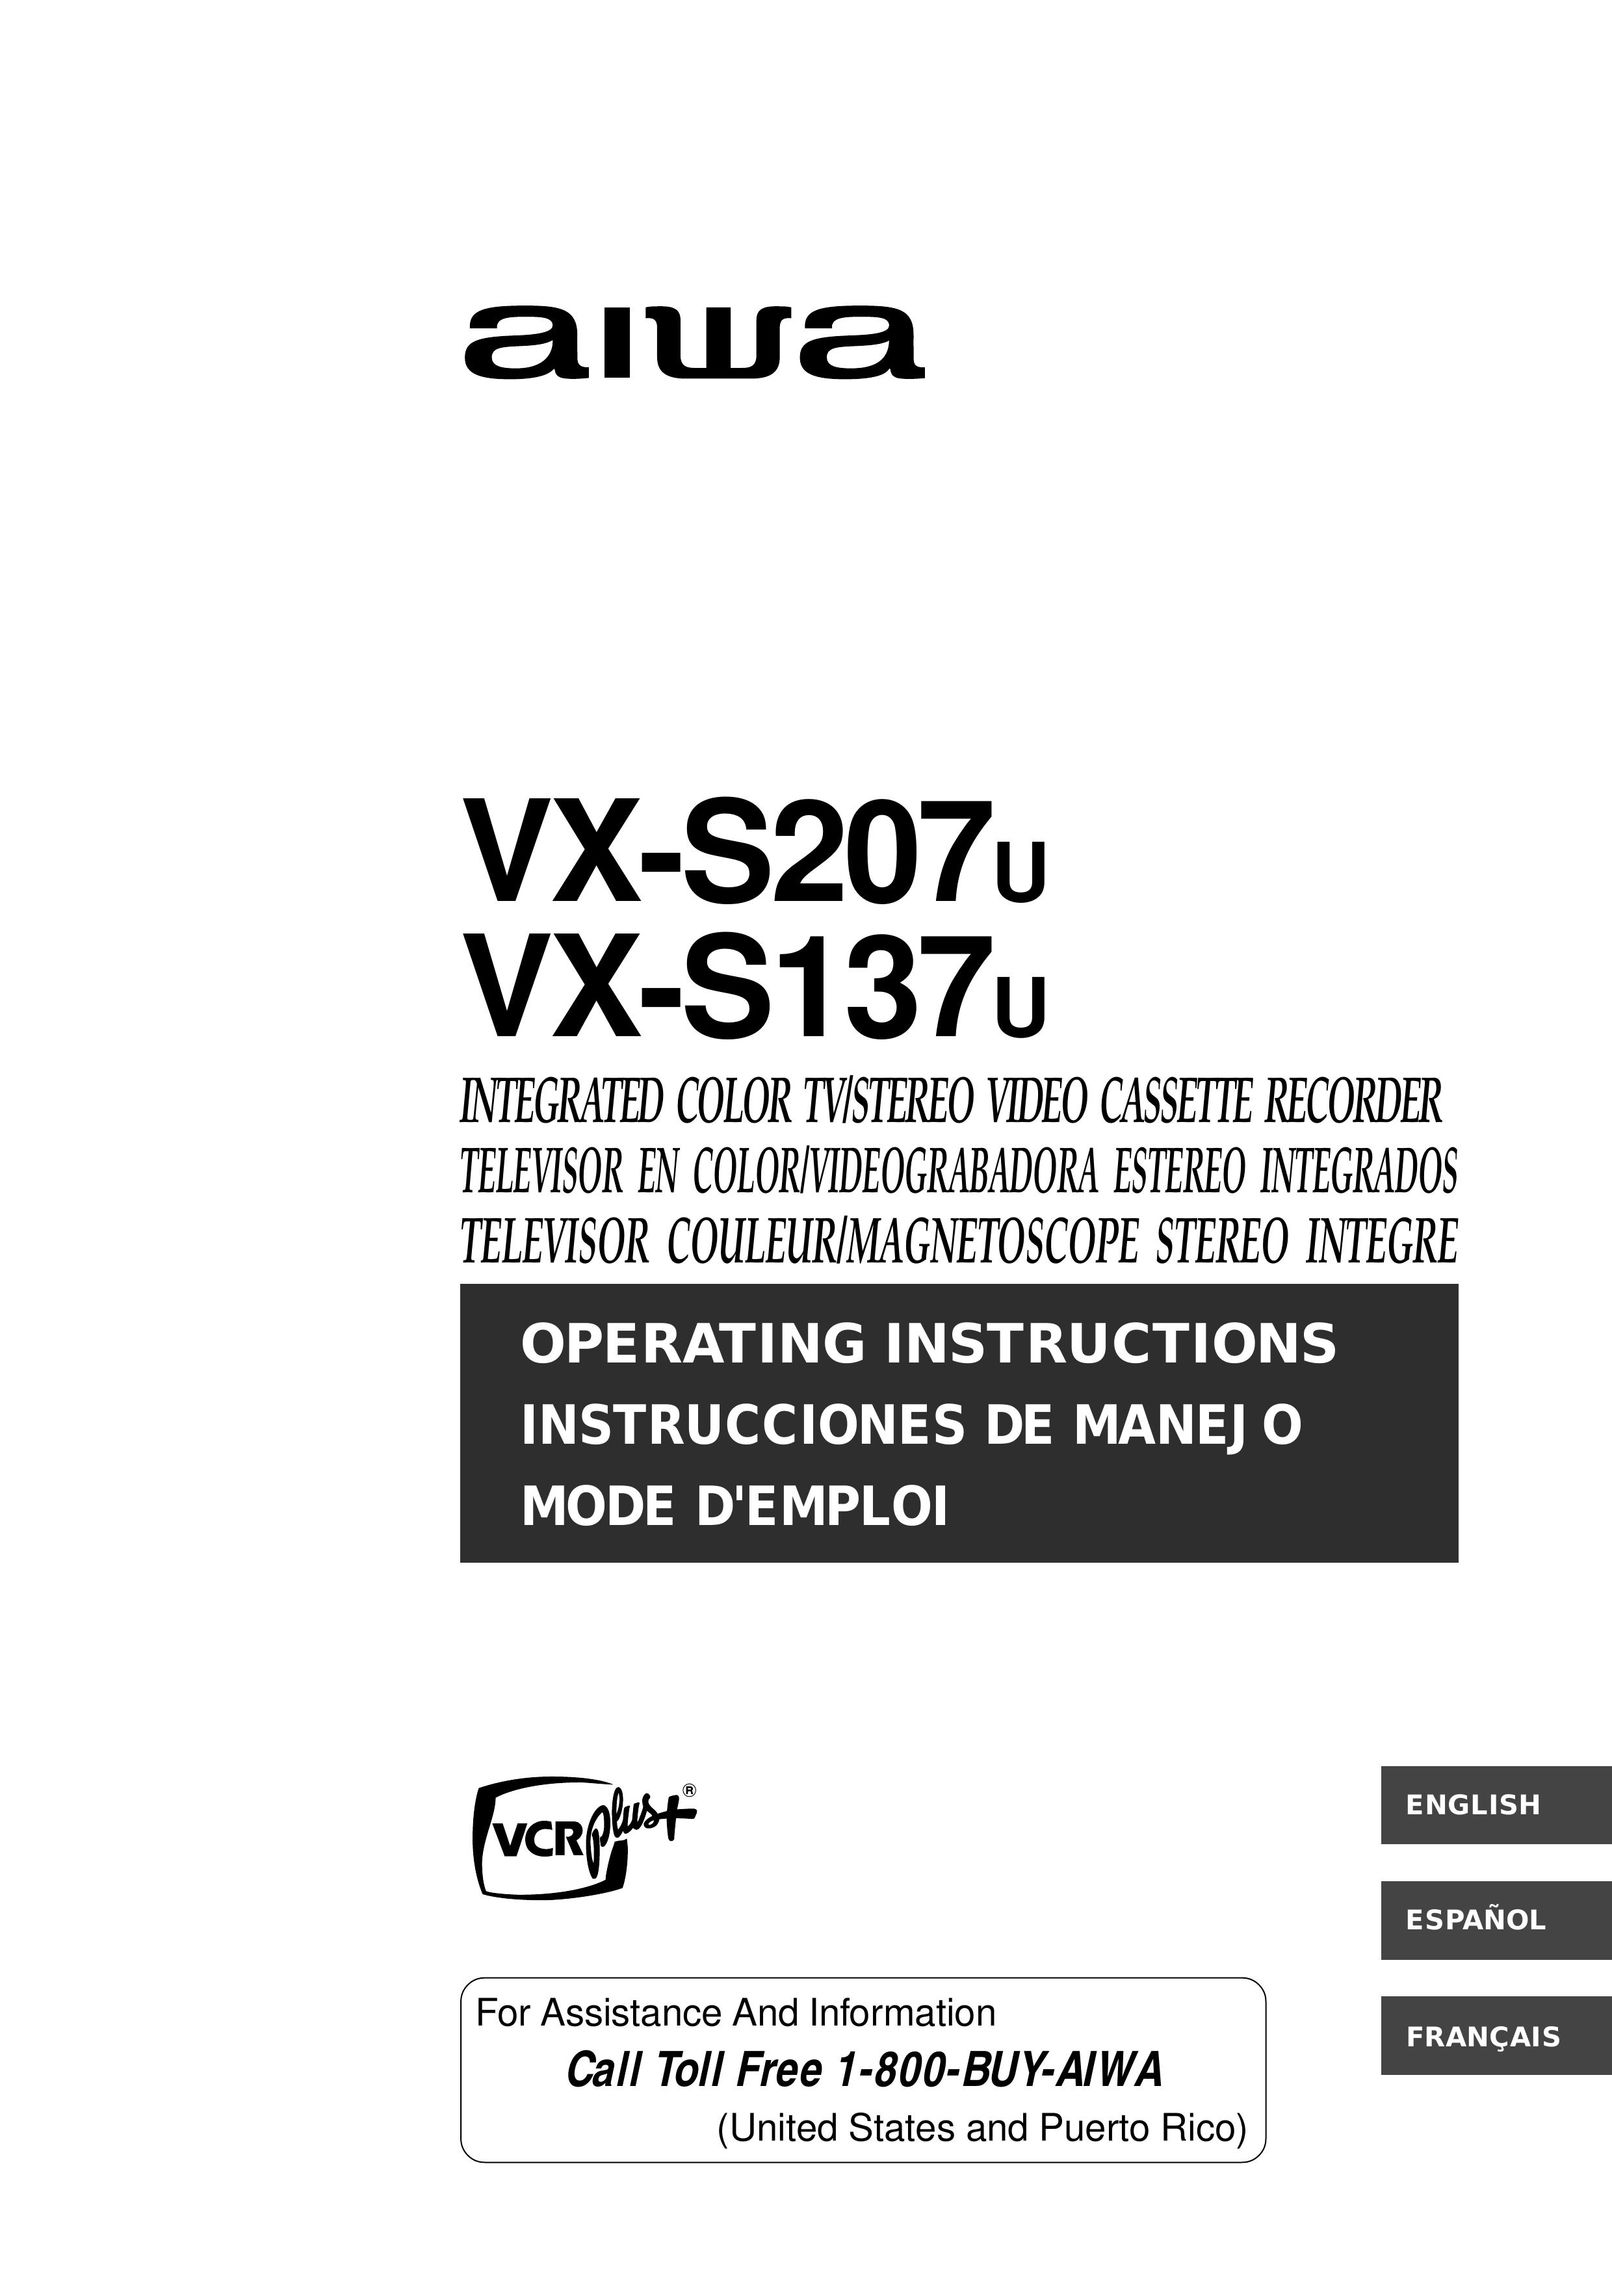 Aiwa VX-S207U VCR User Manual